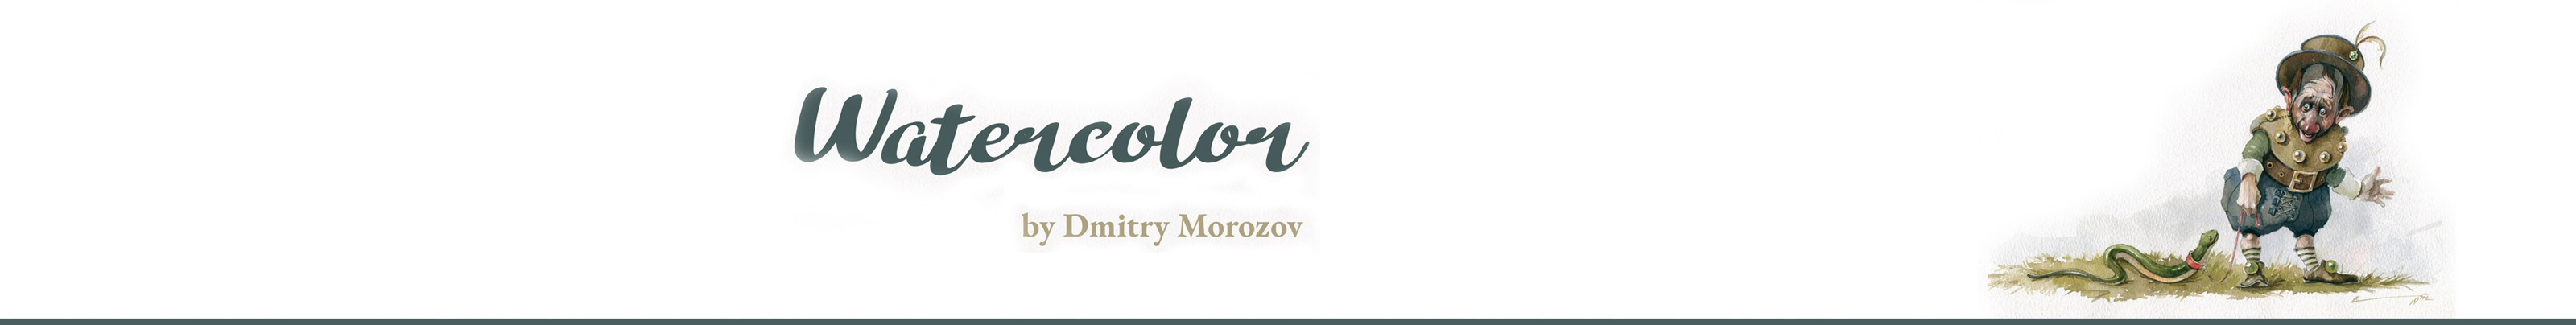 Profielbanner van Dmitry Morozov